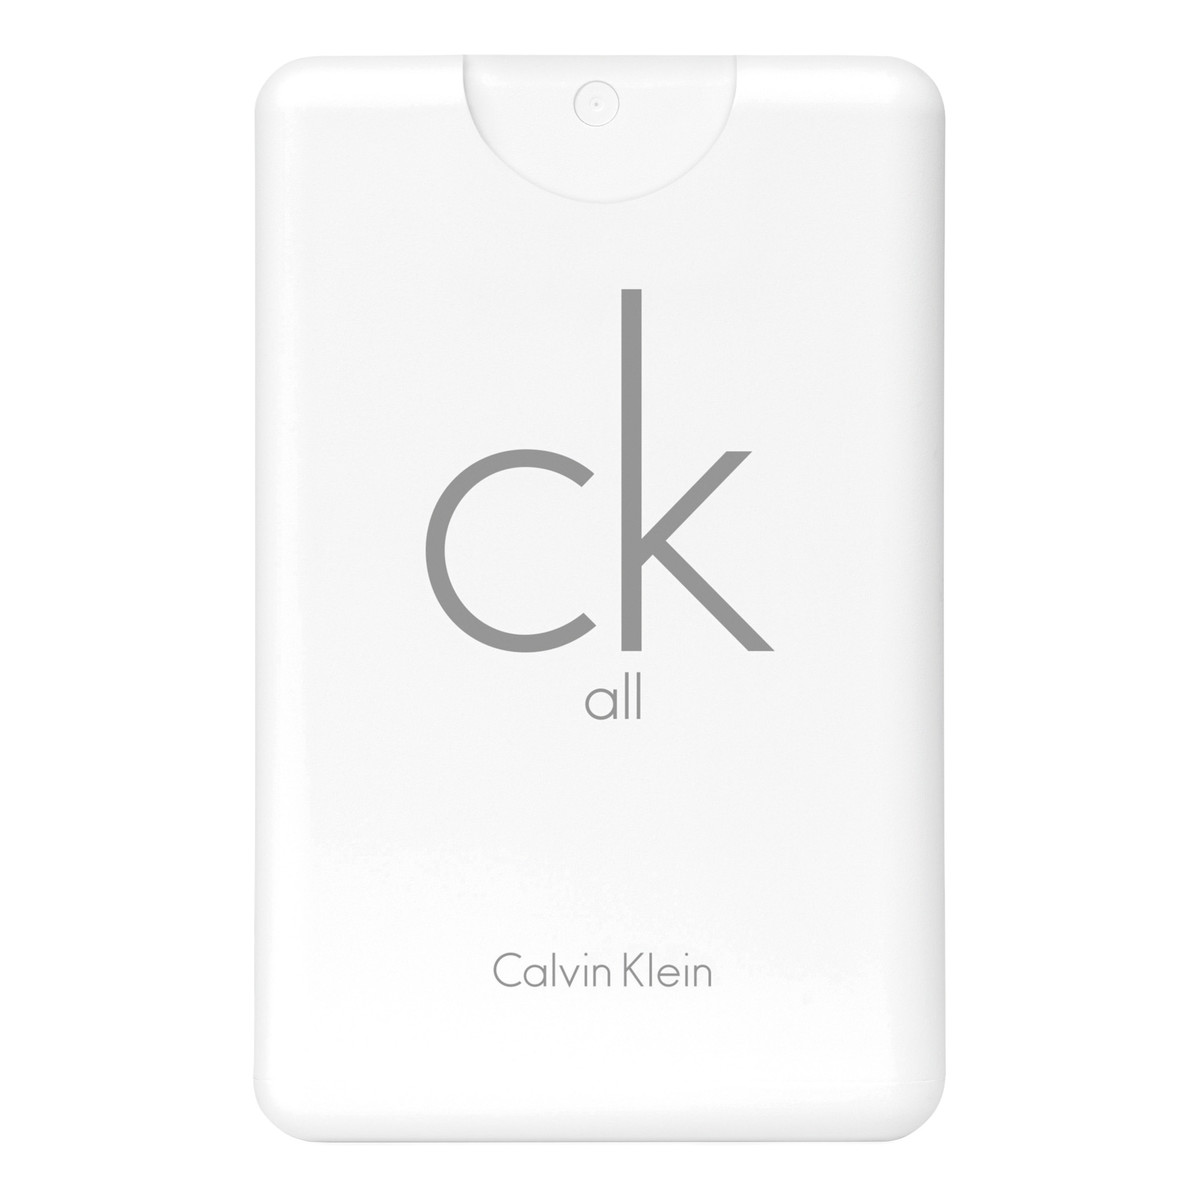 Calvin Klein CK All woda toaletowa 20ml